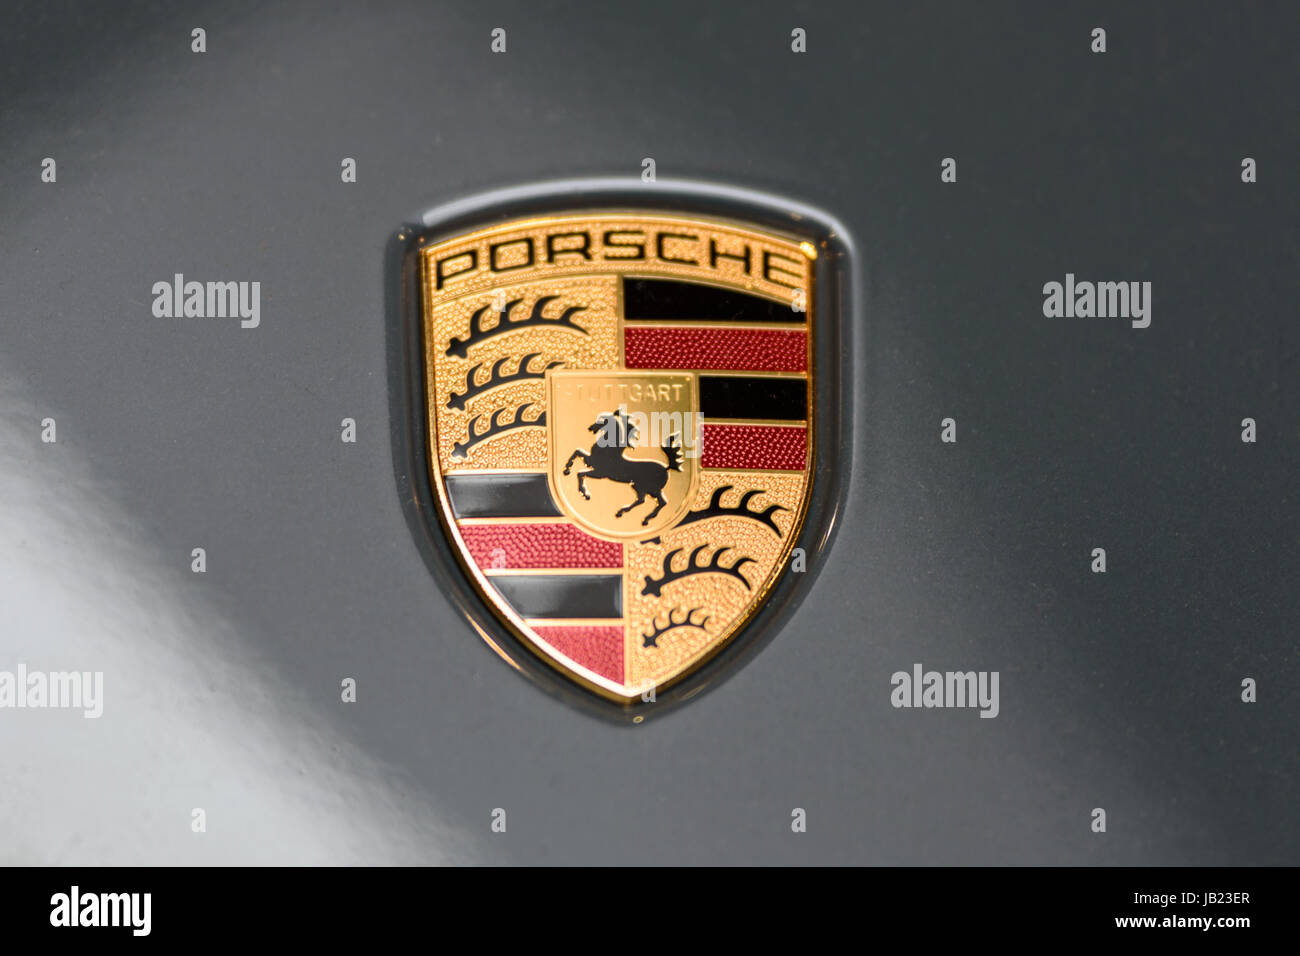 Krakow, Poland, May 21, 2017: Porsche Stuttgart sign close-up during MotoShow in Krakow. Porsche is a famous  German automobile manufacturer. Stock Photo